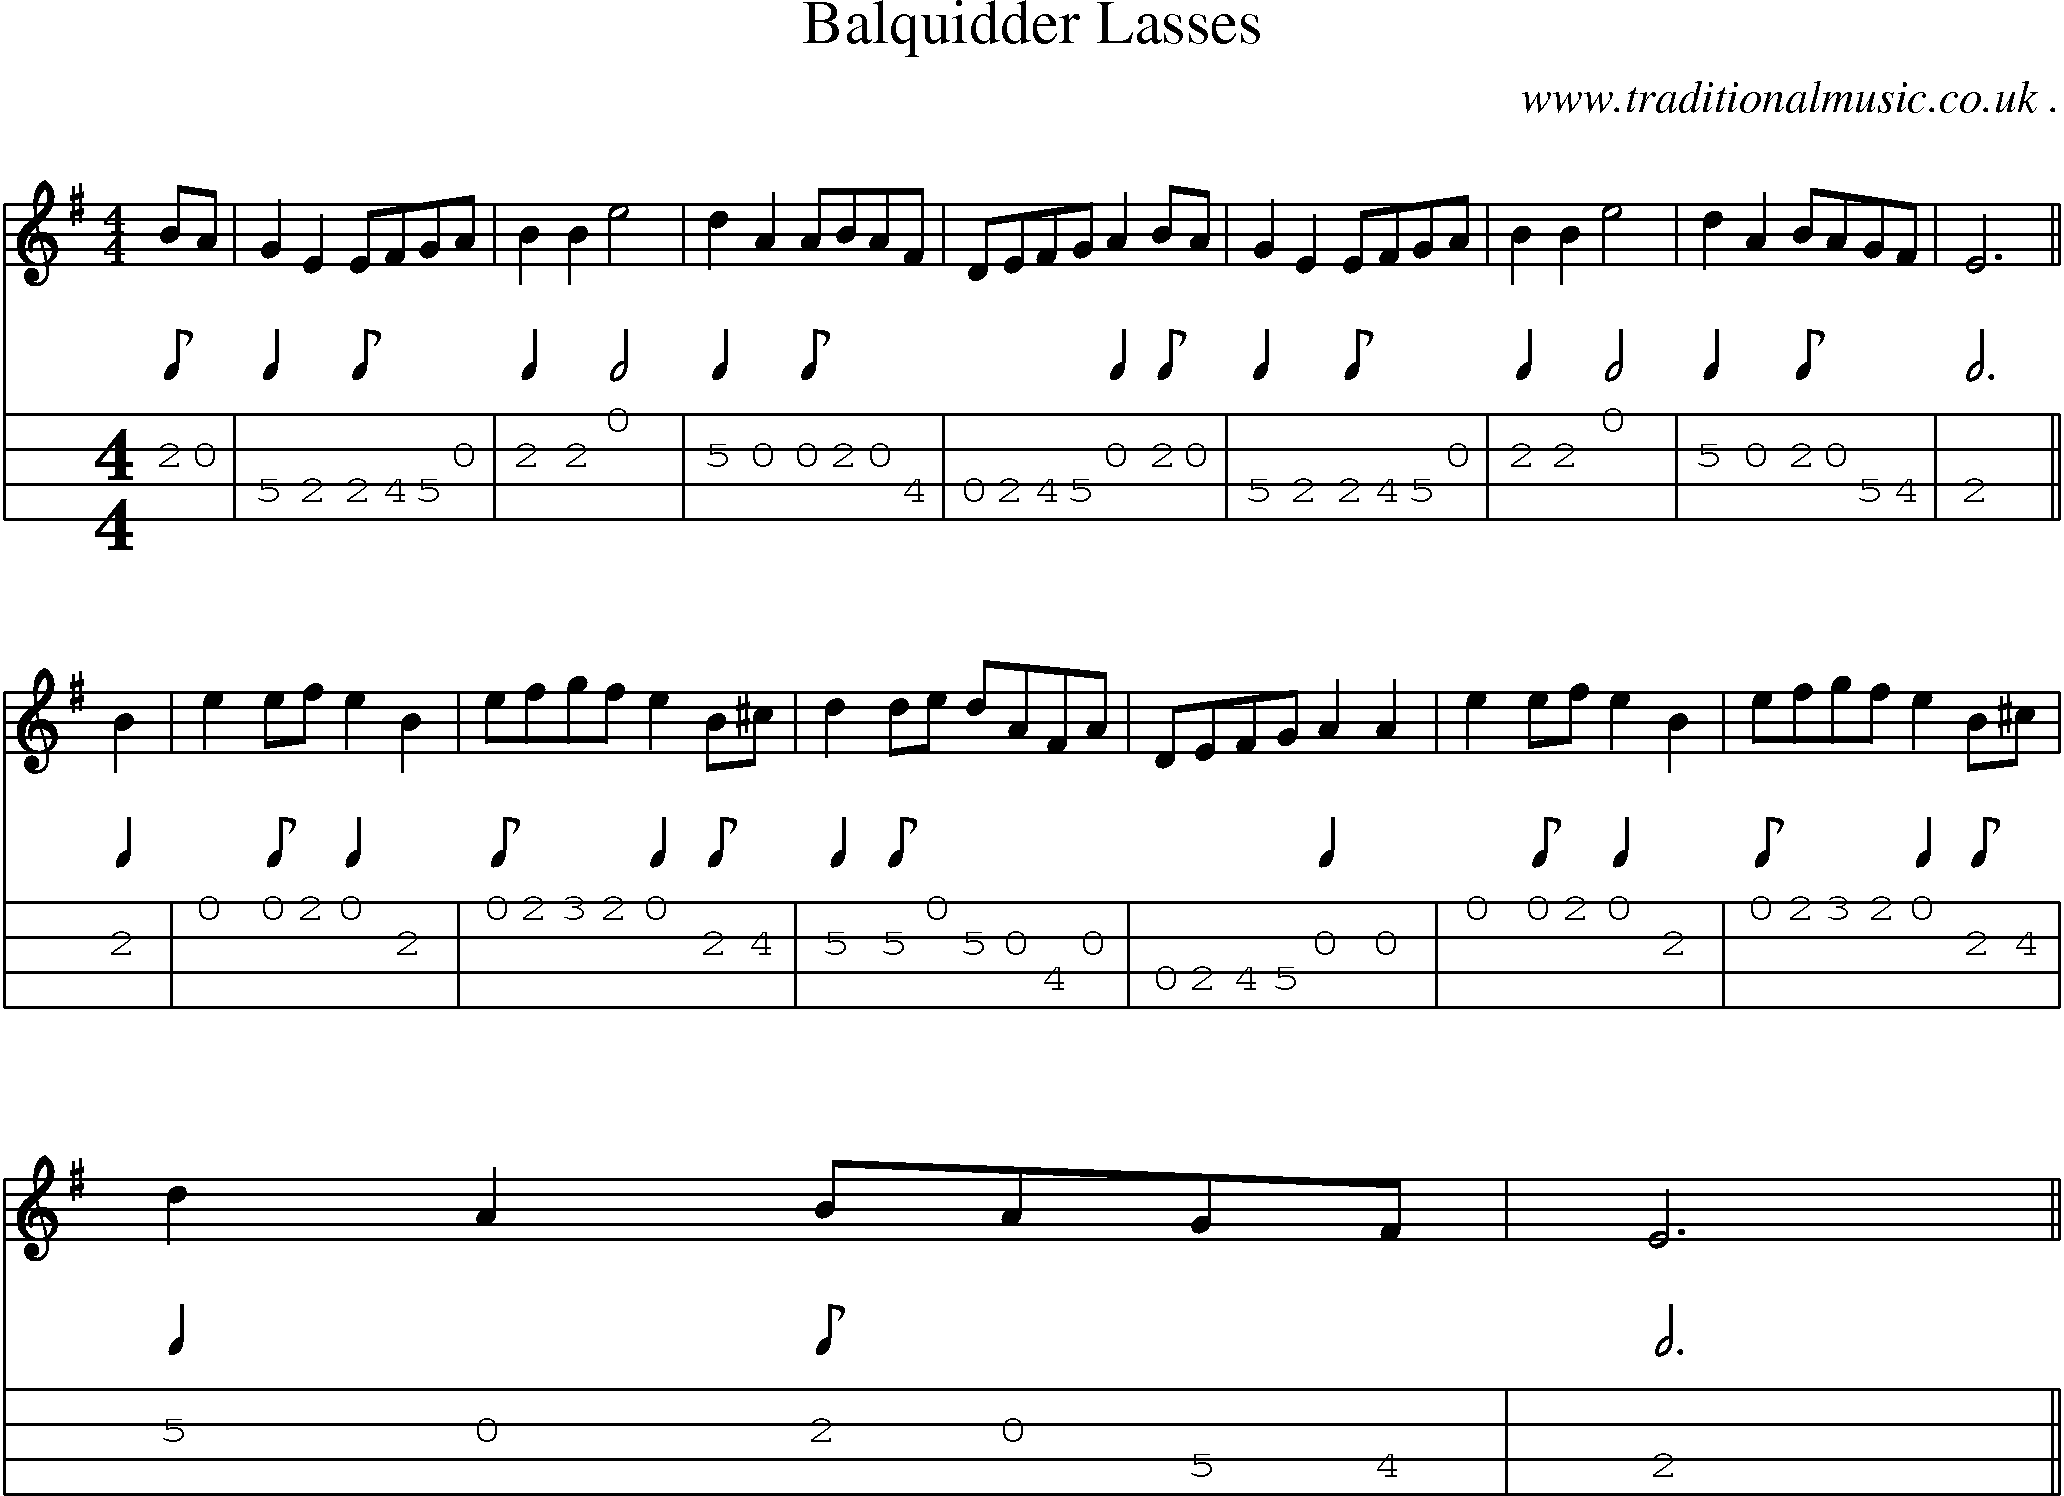 Sheet-Music and Mandolin Tabs for Balquidder Lasses